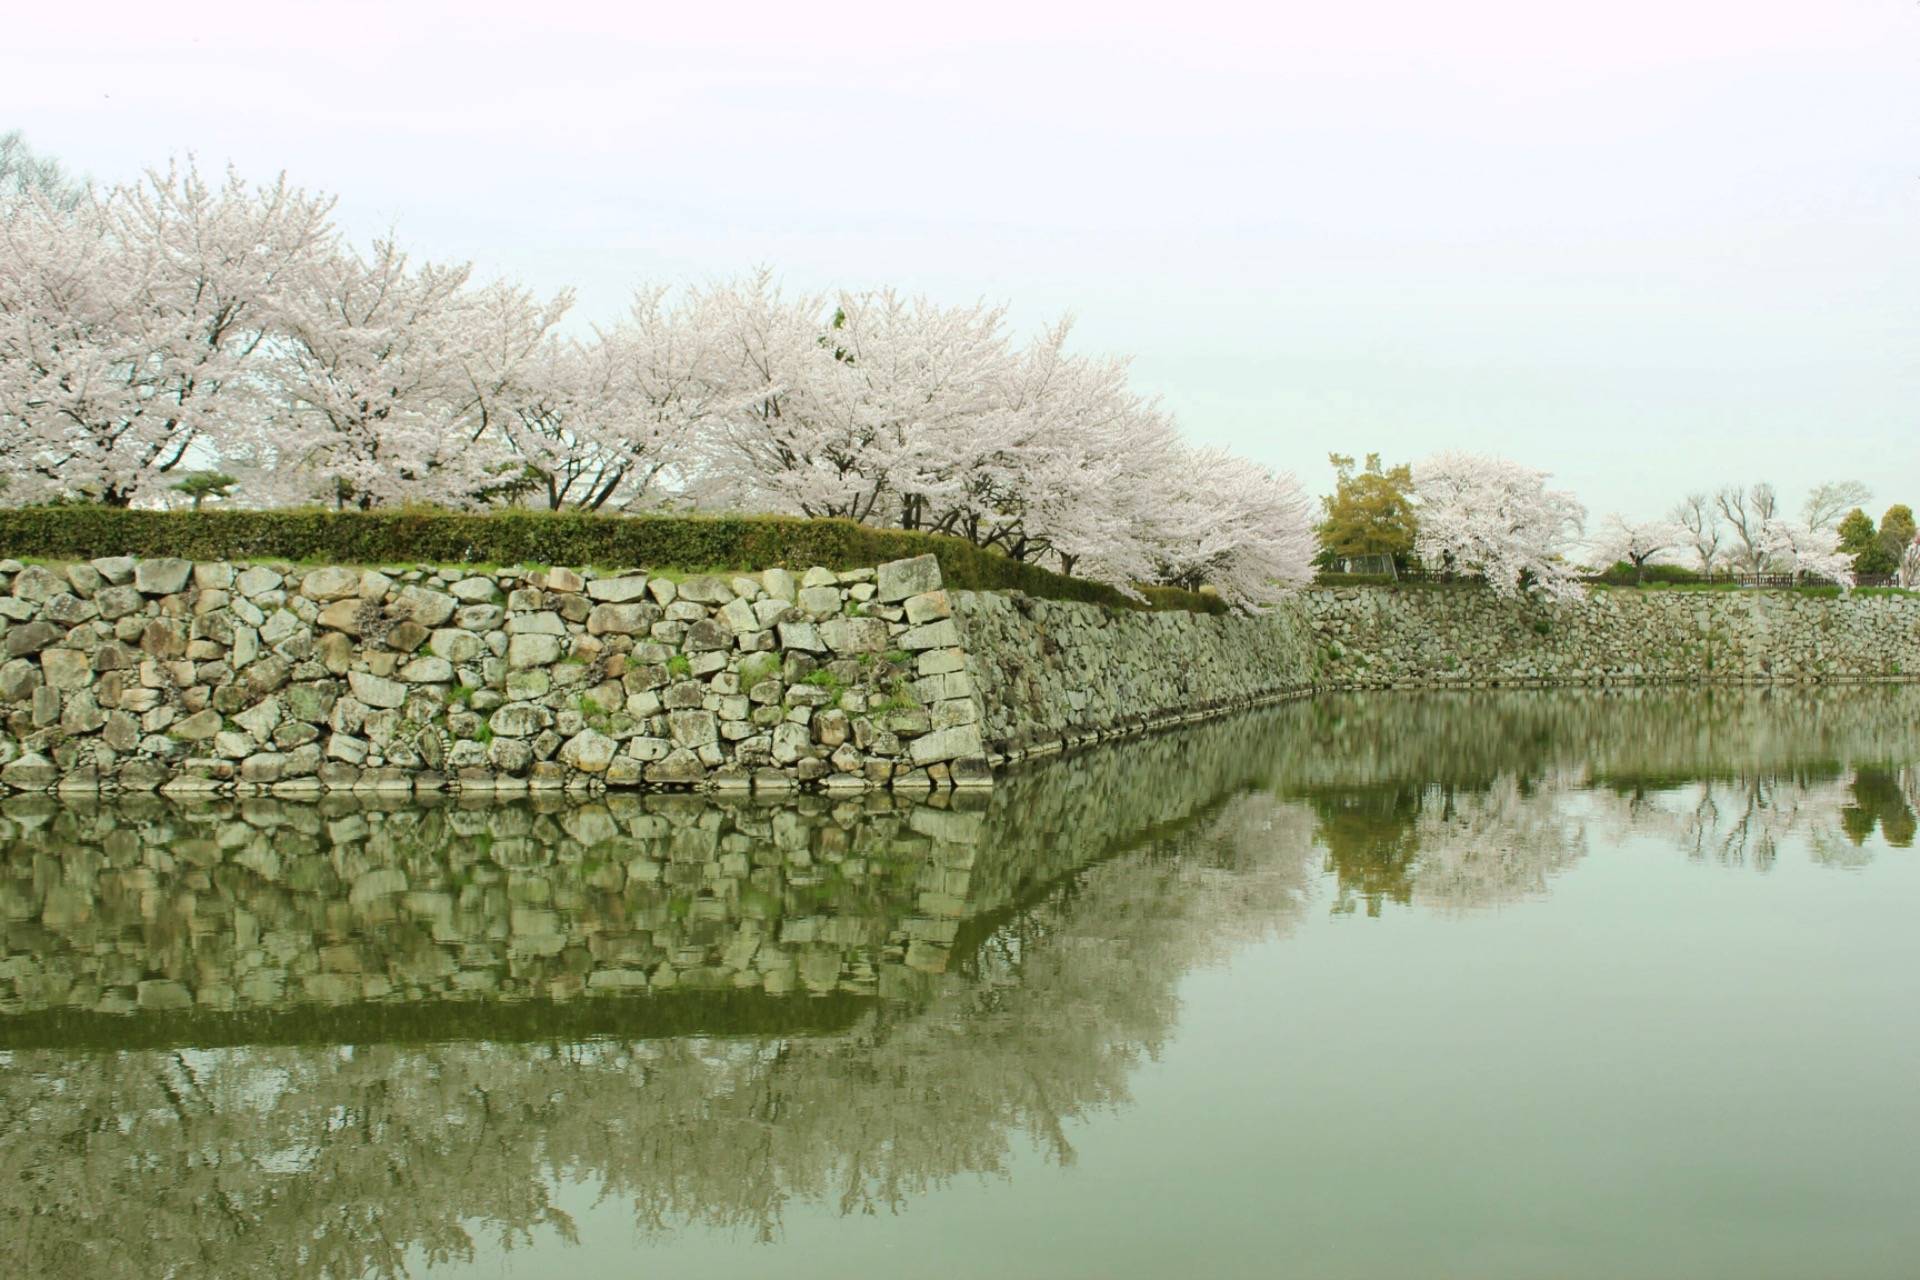 Cherry blossom trees around moat